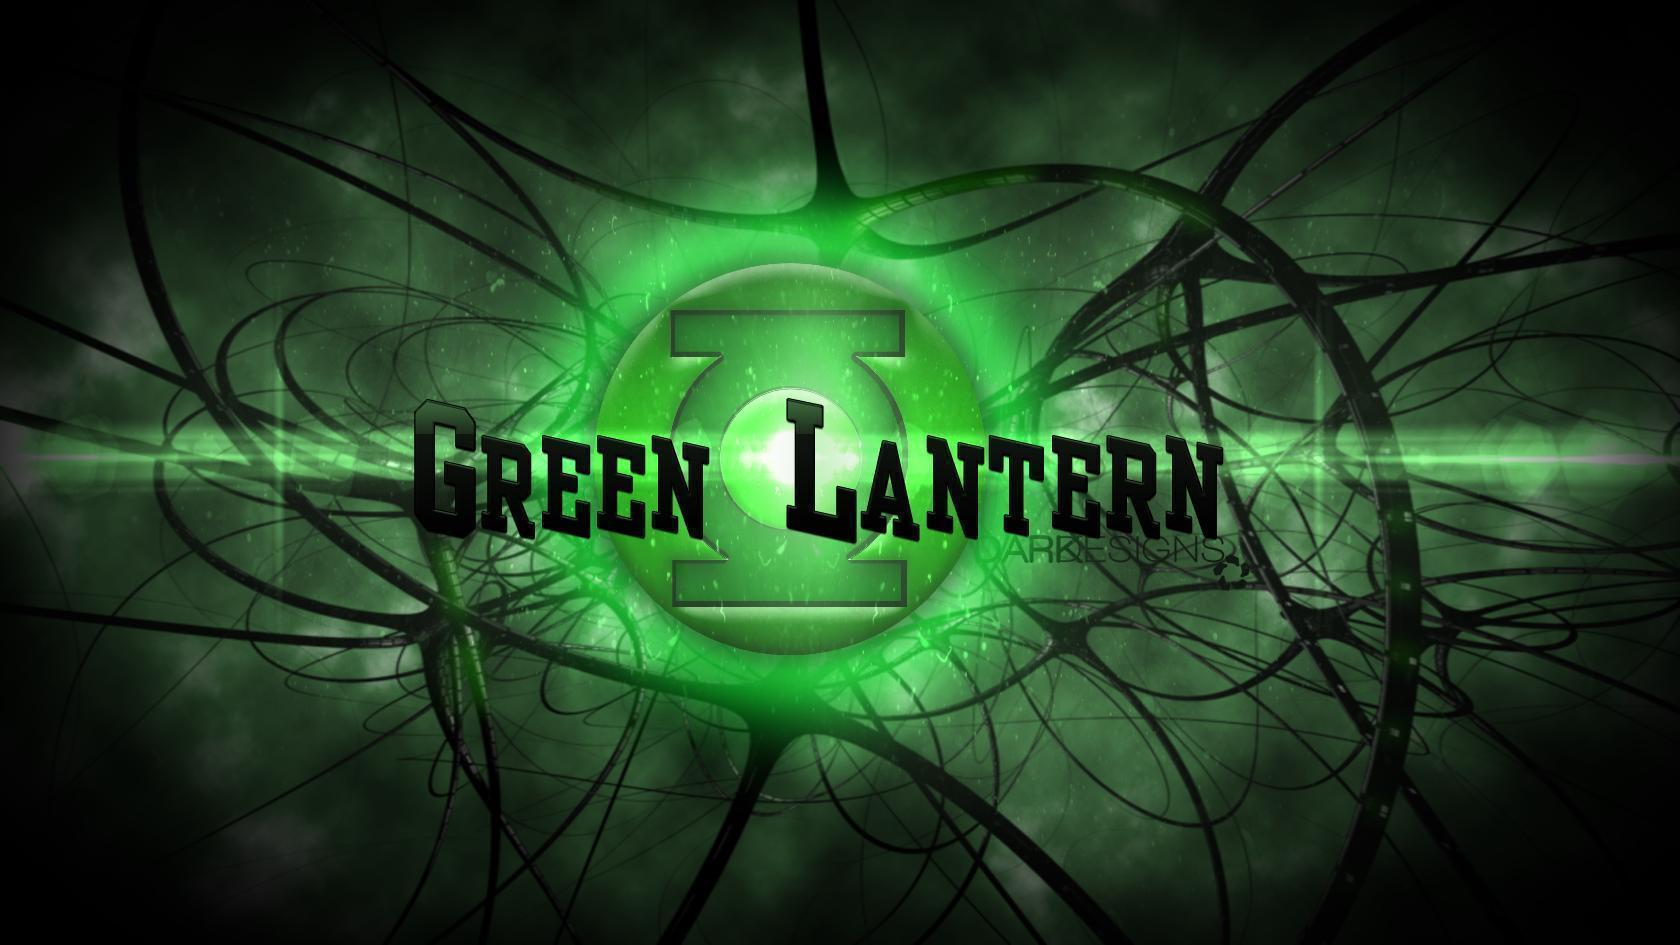 Desktop Wallpaper Green Lantern Movie 1920 X 1080 806 Kb Jpeg